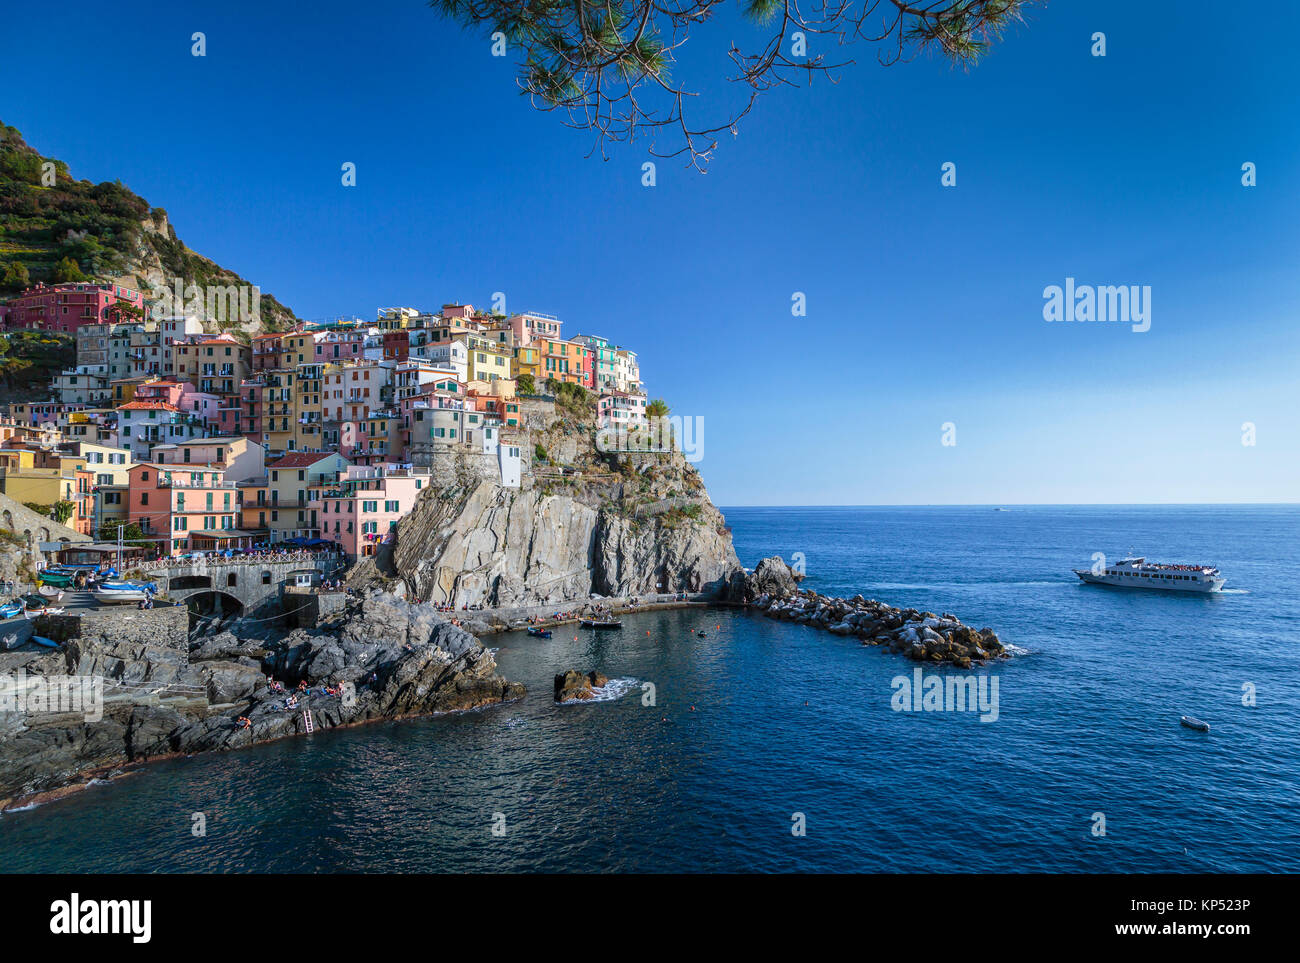 The cliff-side village of Manarola, Cinque terre, Liguria, Italy, Europe. Stock Photo